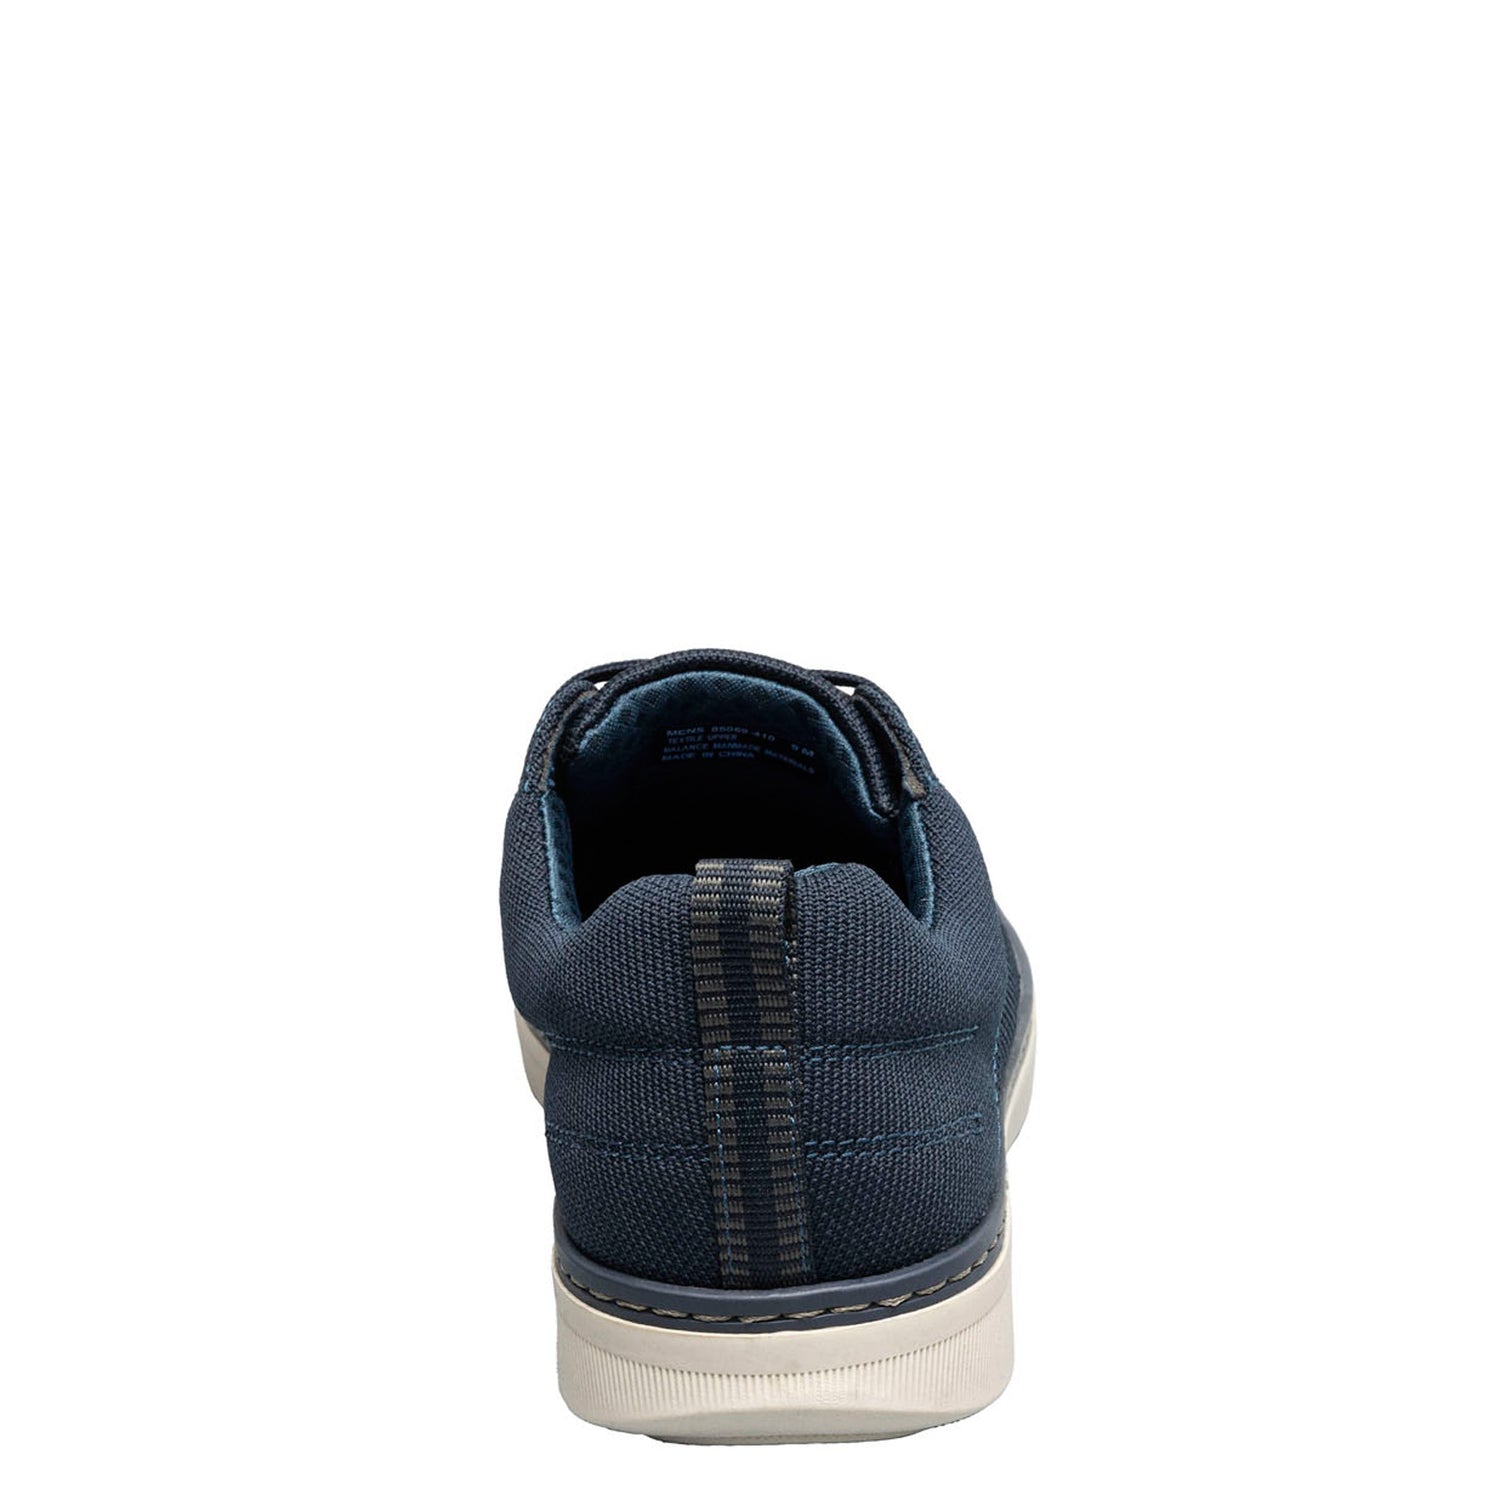 Peltz Shoes  Men's Nunn Bush Aspire Knit Oxford Navy 85069-410